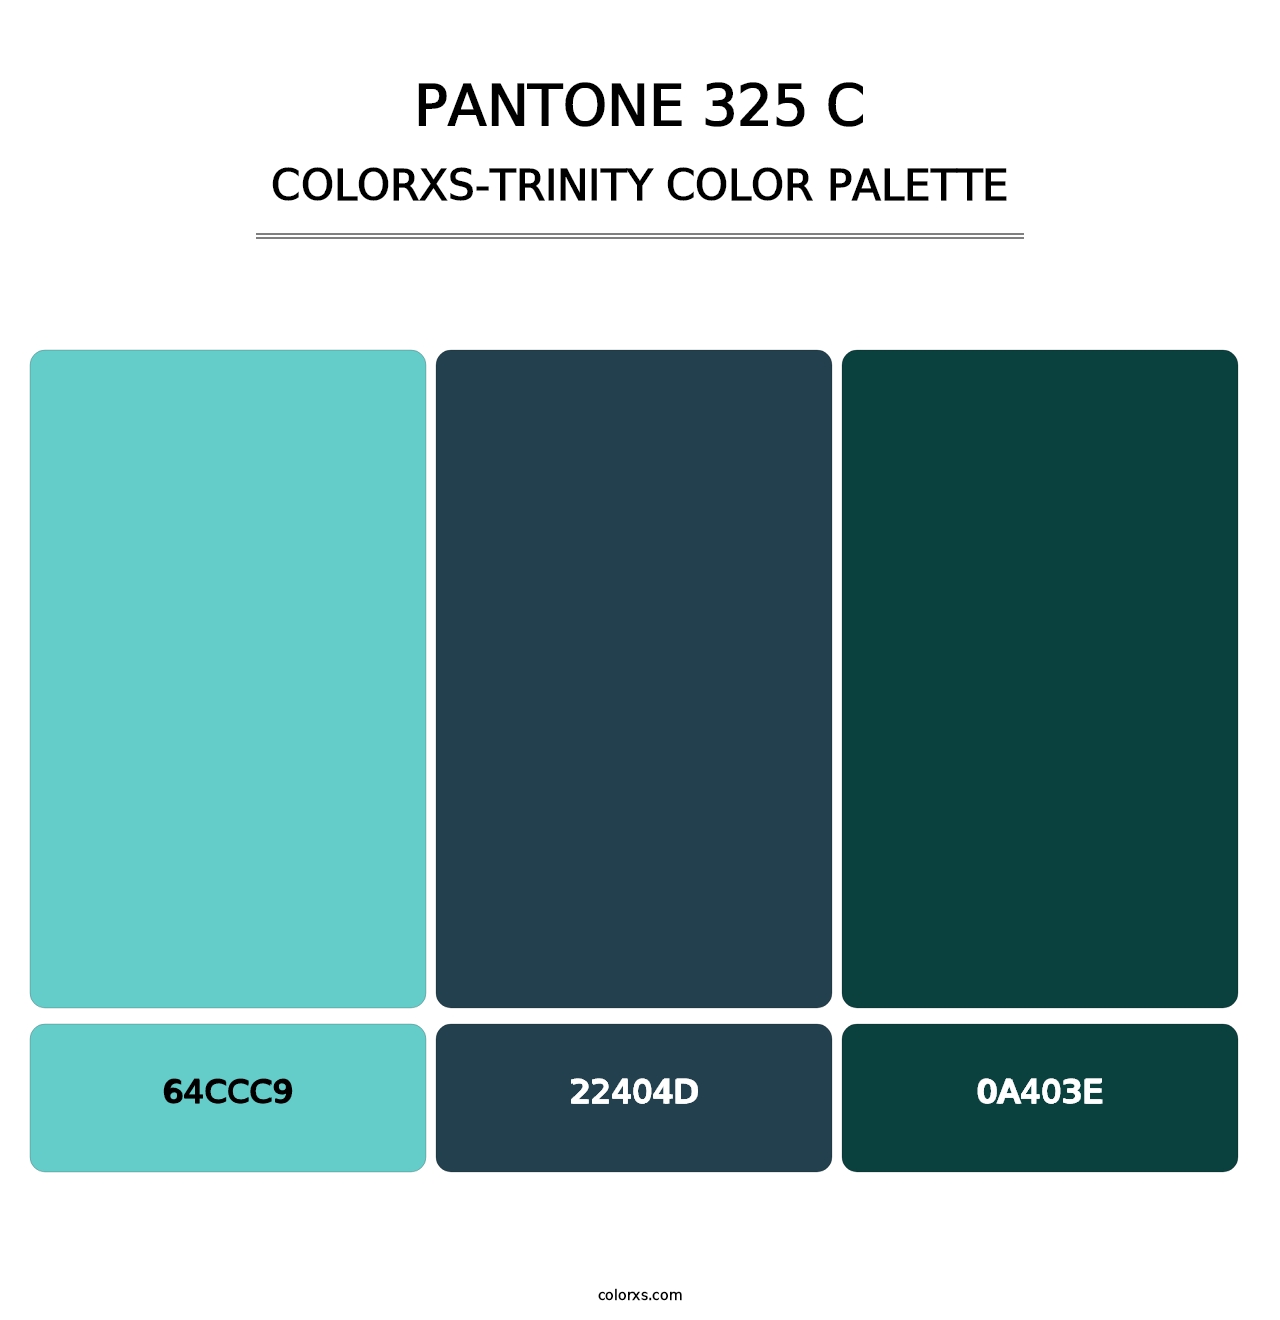 PANTONE 325 C - Colorxs Trinity Palette